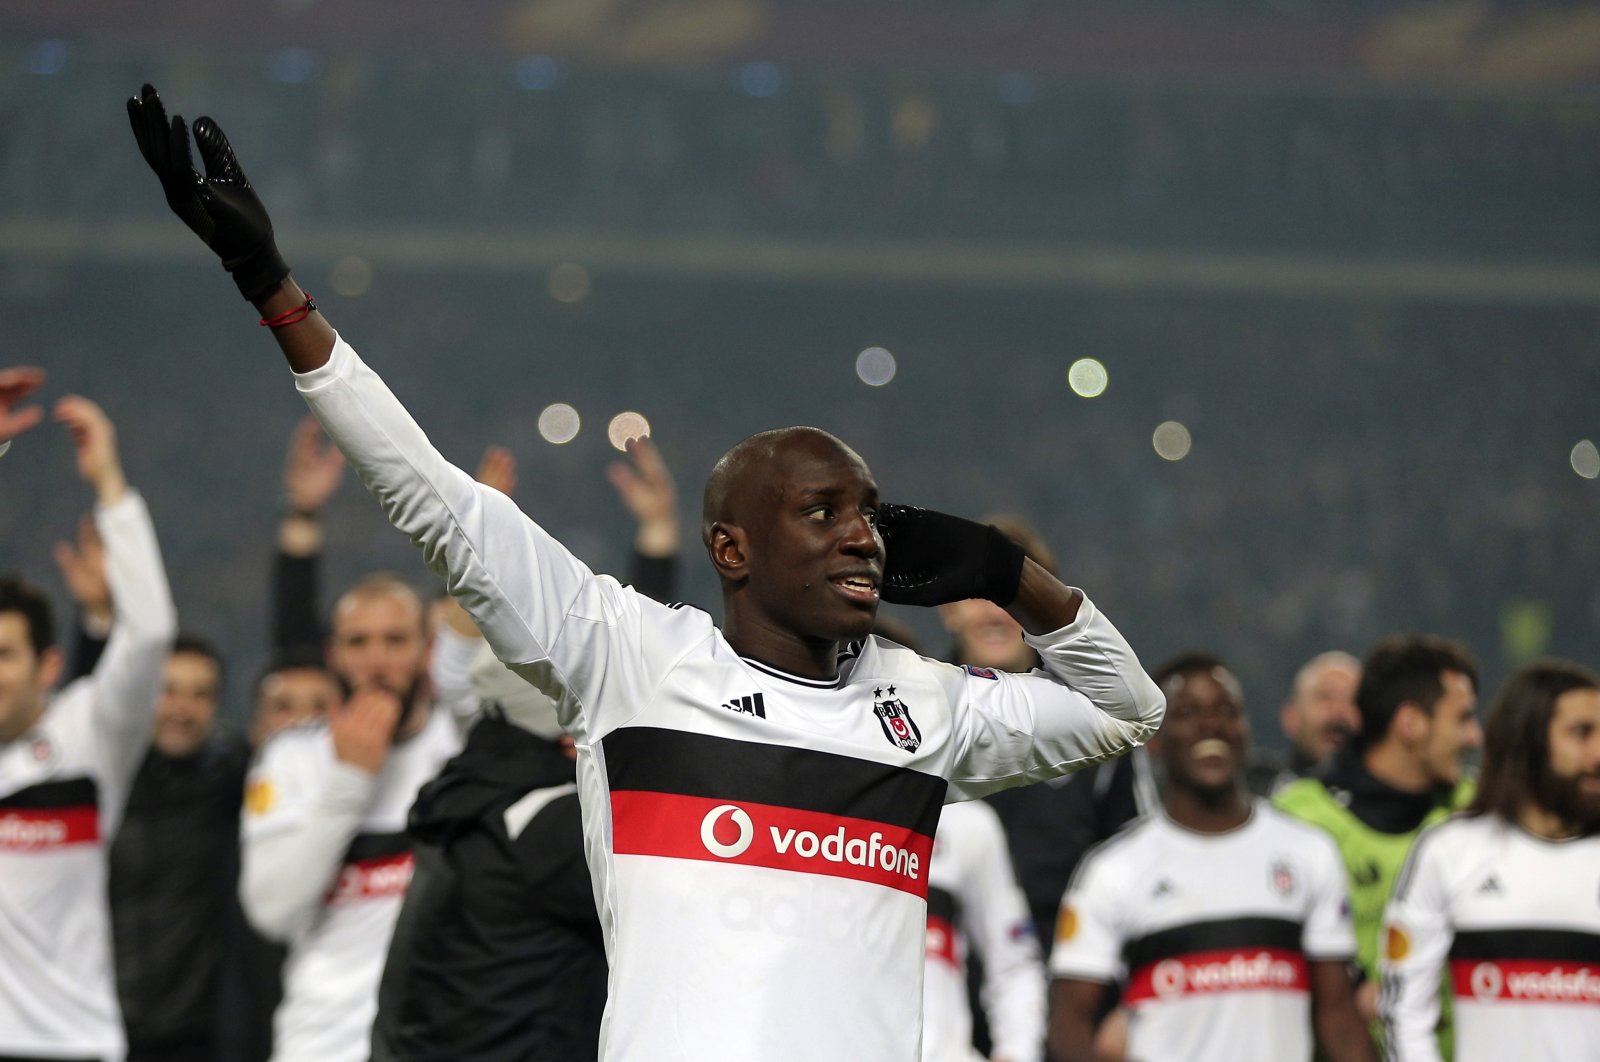 Beşiktaş's Demba Ba reacts after a Europa League match against Liverpool, Atatürk Olympic Stadium in Istanbul, Turkey, Feb. 26, 2015. (AP Photo)